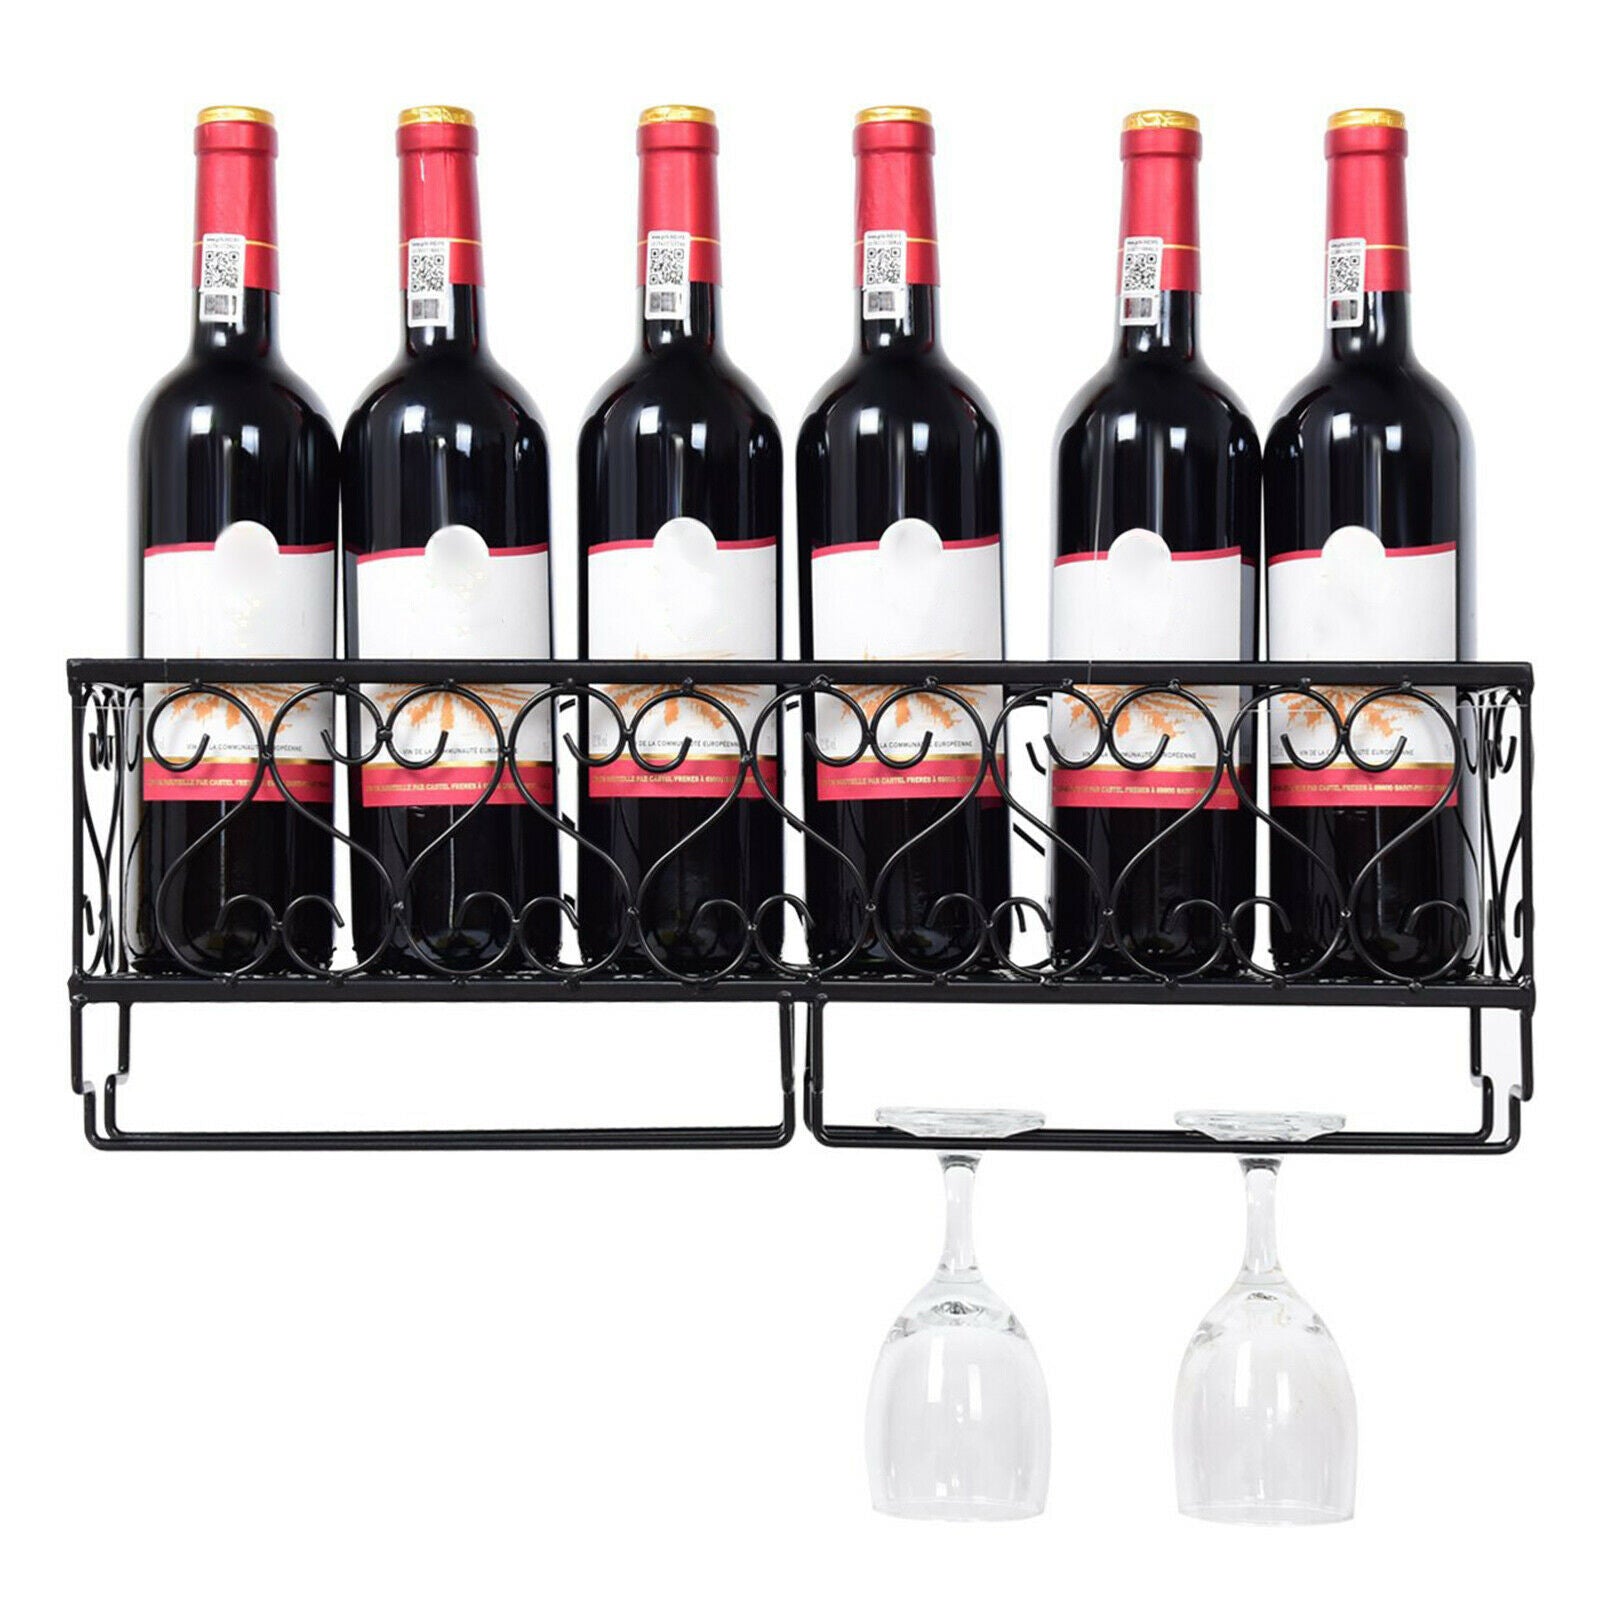 Iron Wine Rack Countertop Holder Home Display for Shelf Organizer Rack